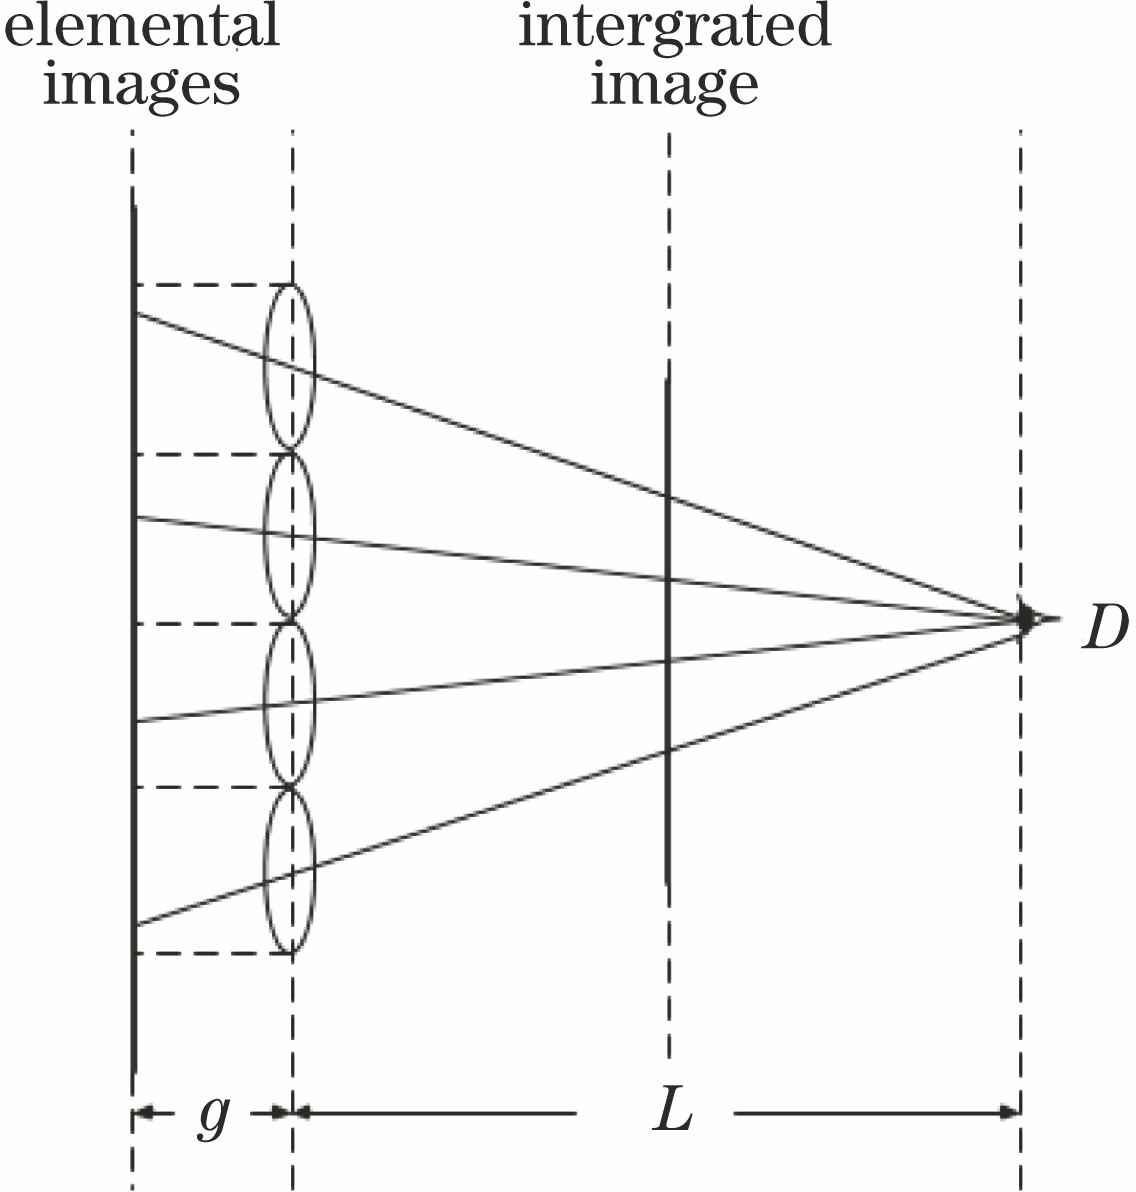 Principle of computational reconstruction based on light tracing